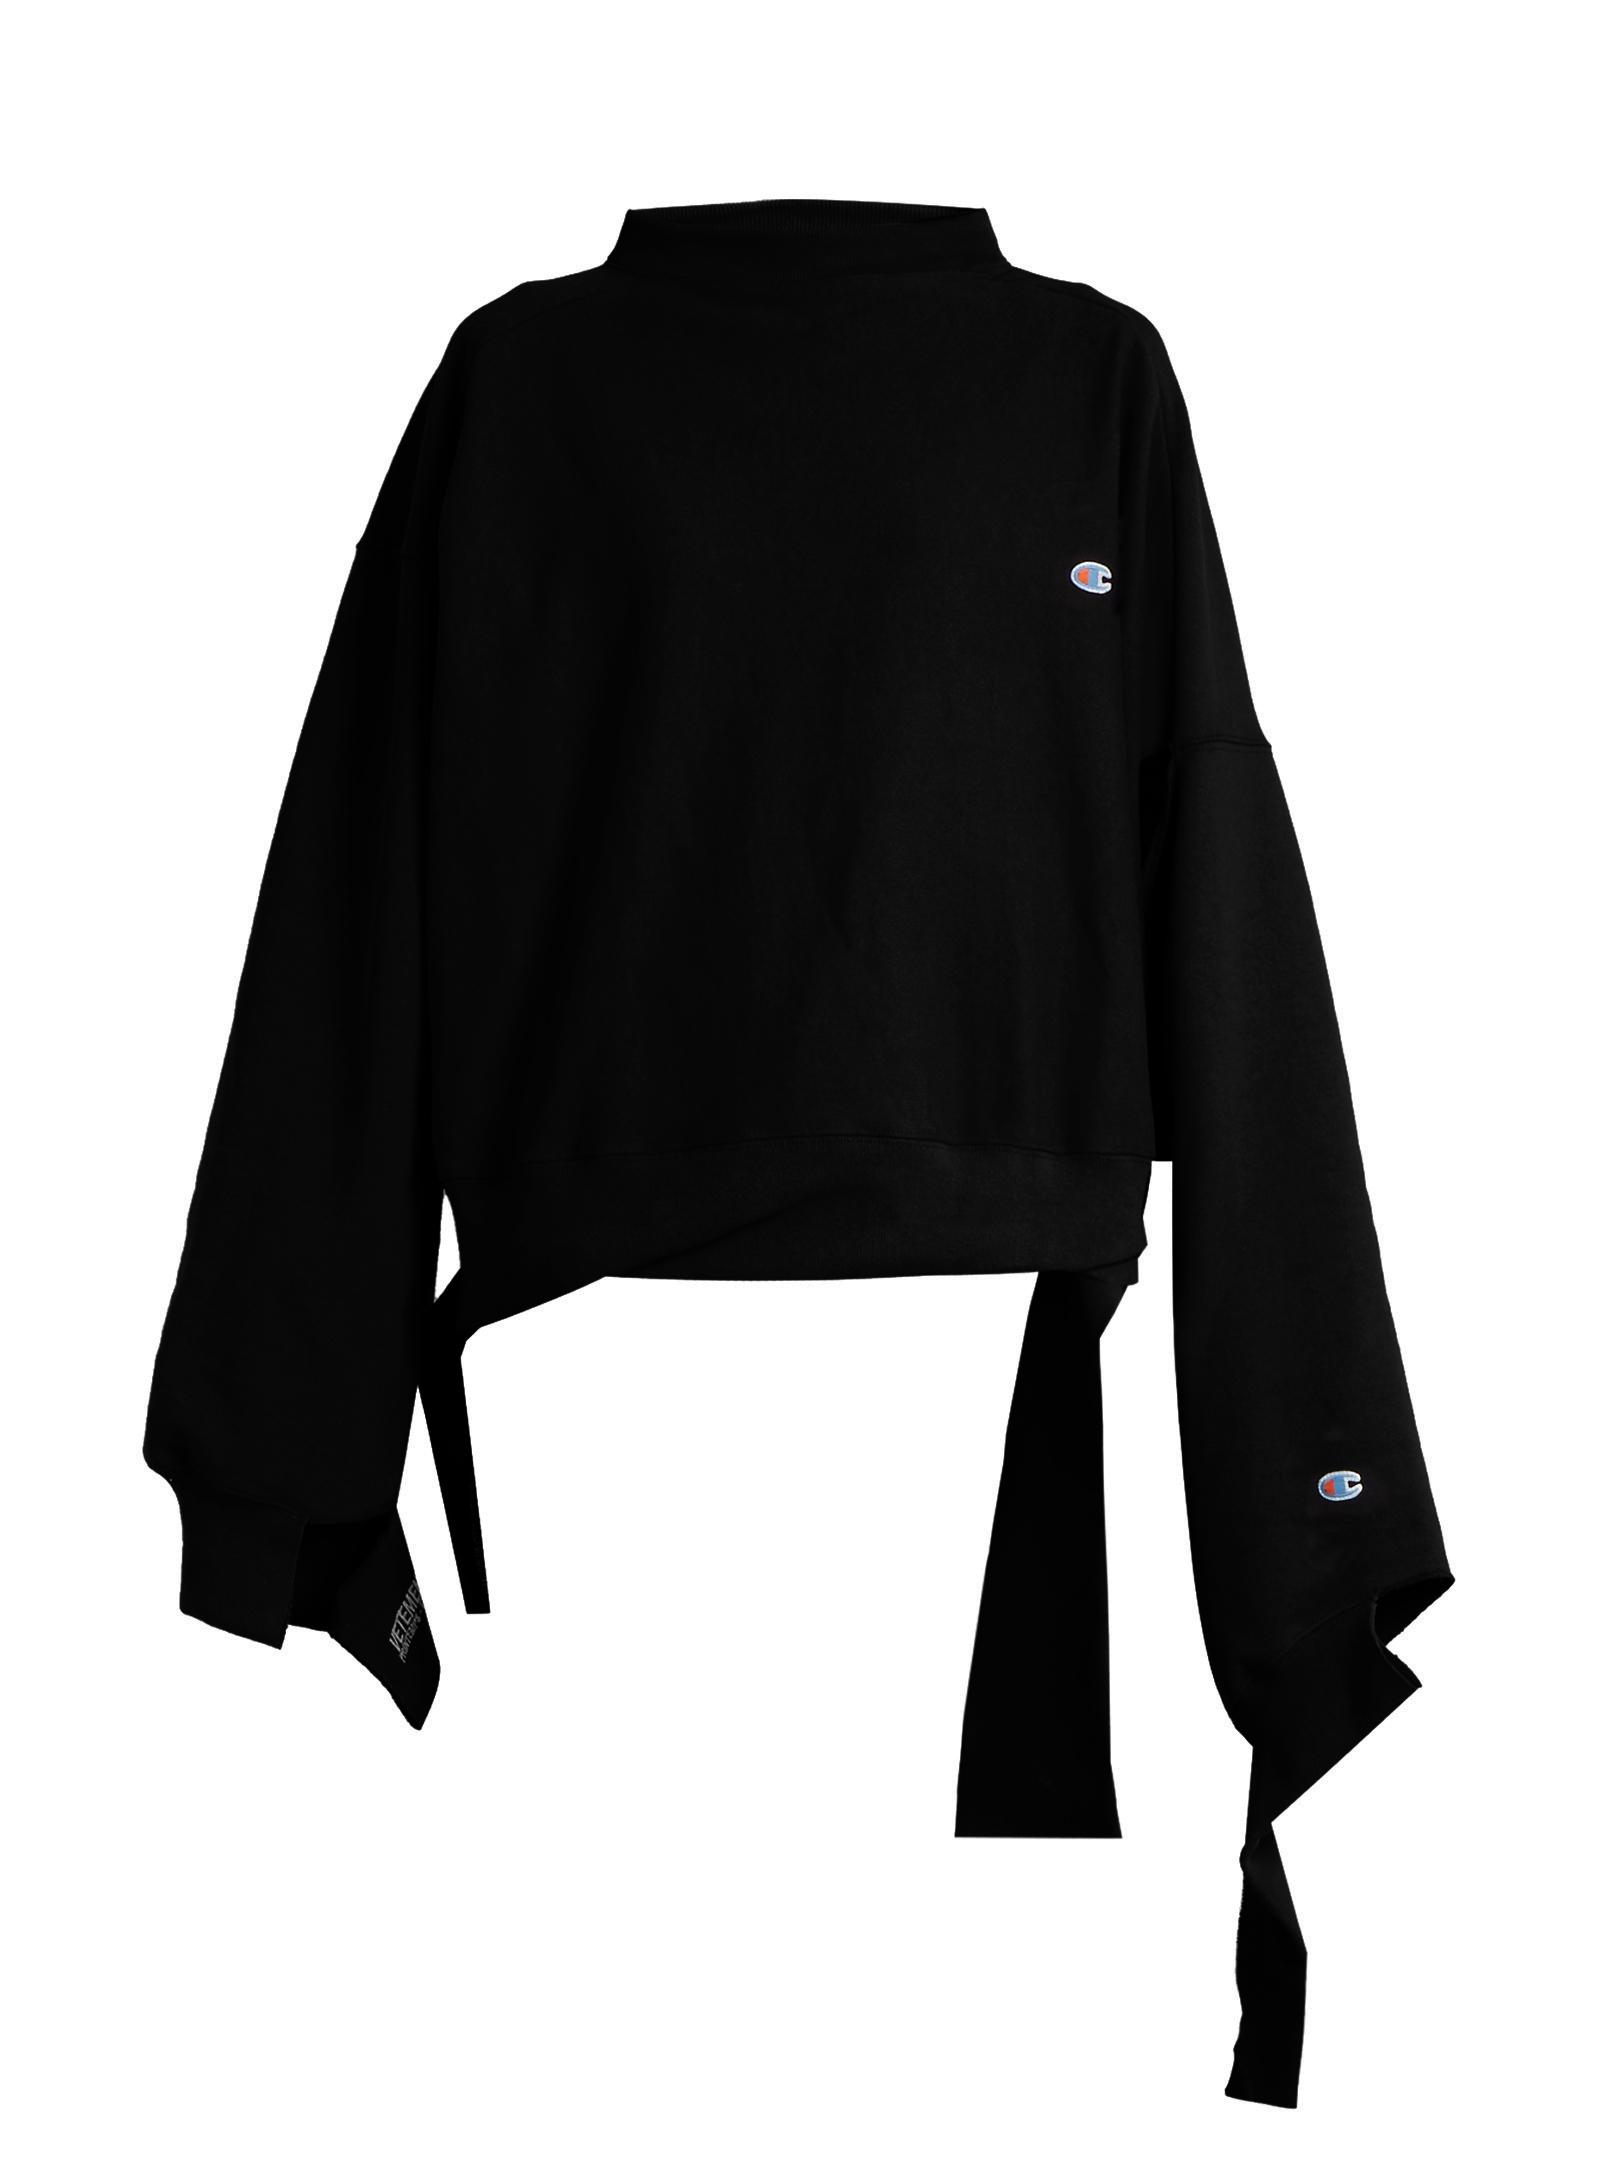 Vetements X Champion Oversized Cotton-blend Sweatshirt in Black - Lyst